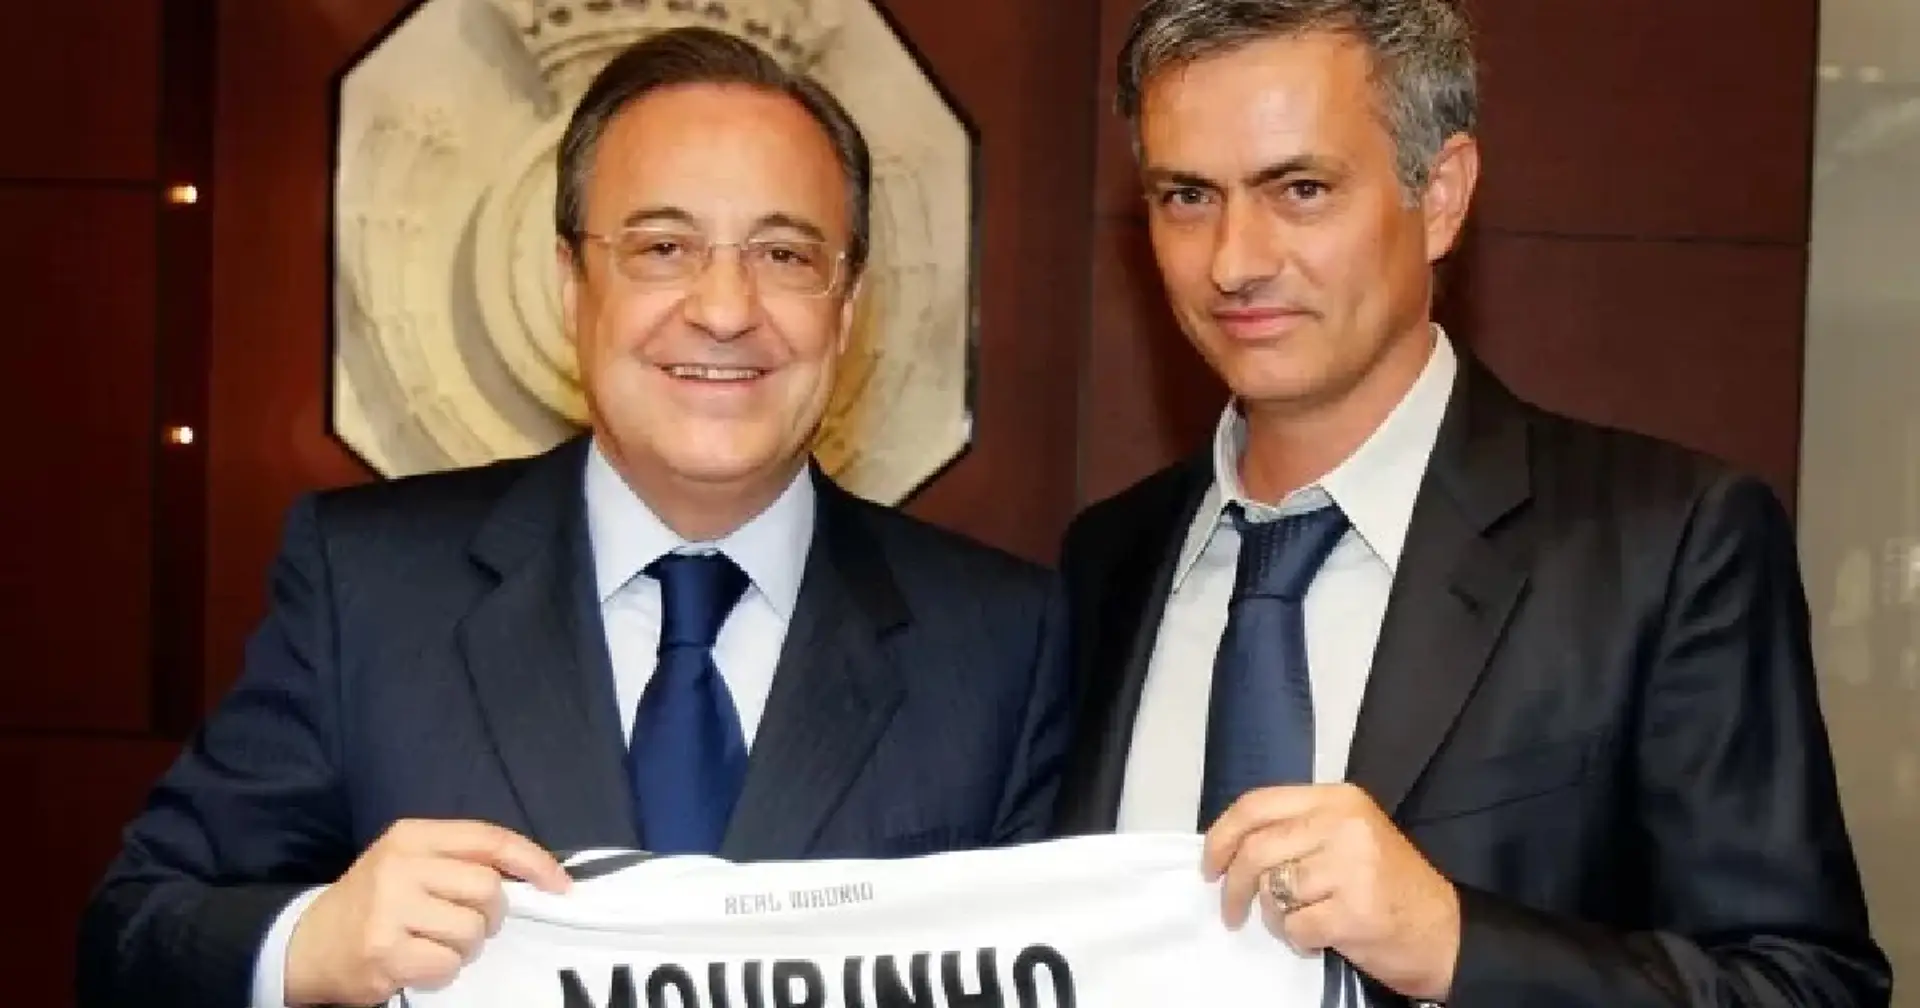 'I’m Madridista': Mourinho reacts to potential Real Madrid return as Ancelotti successor 